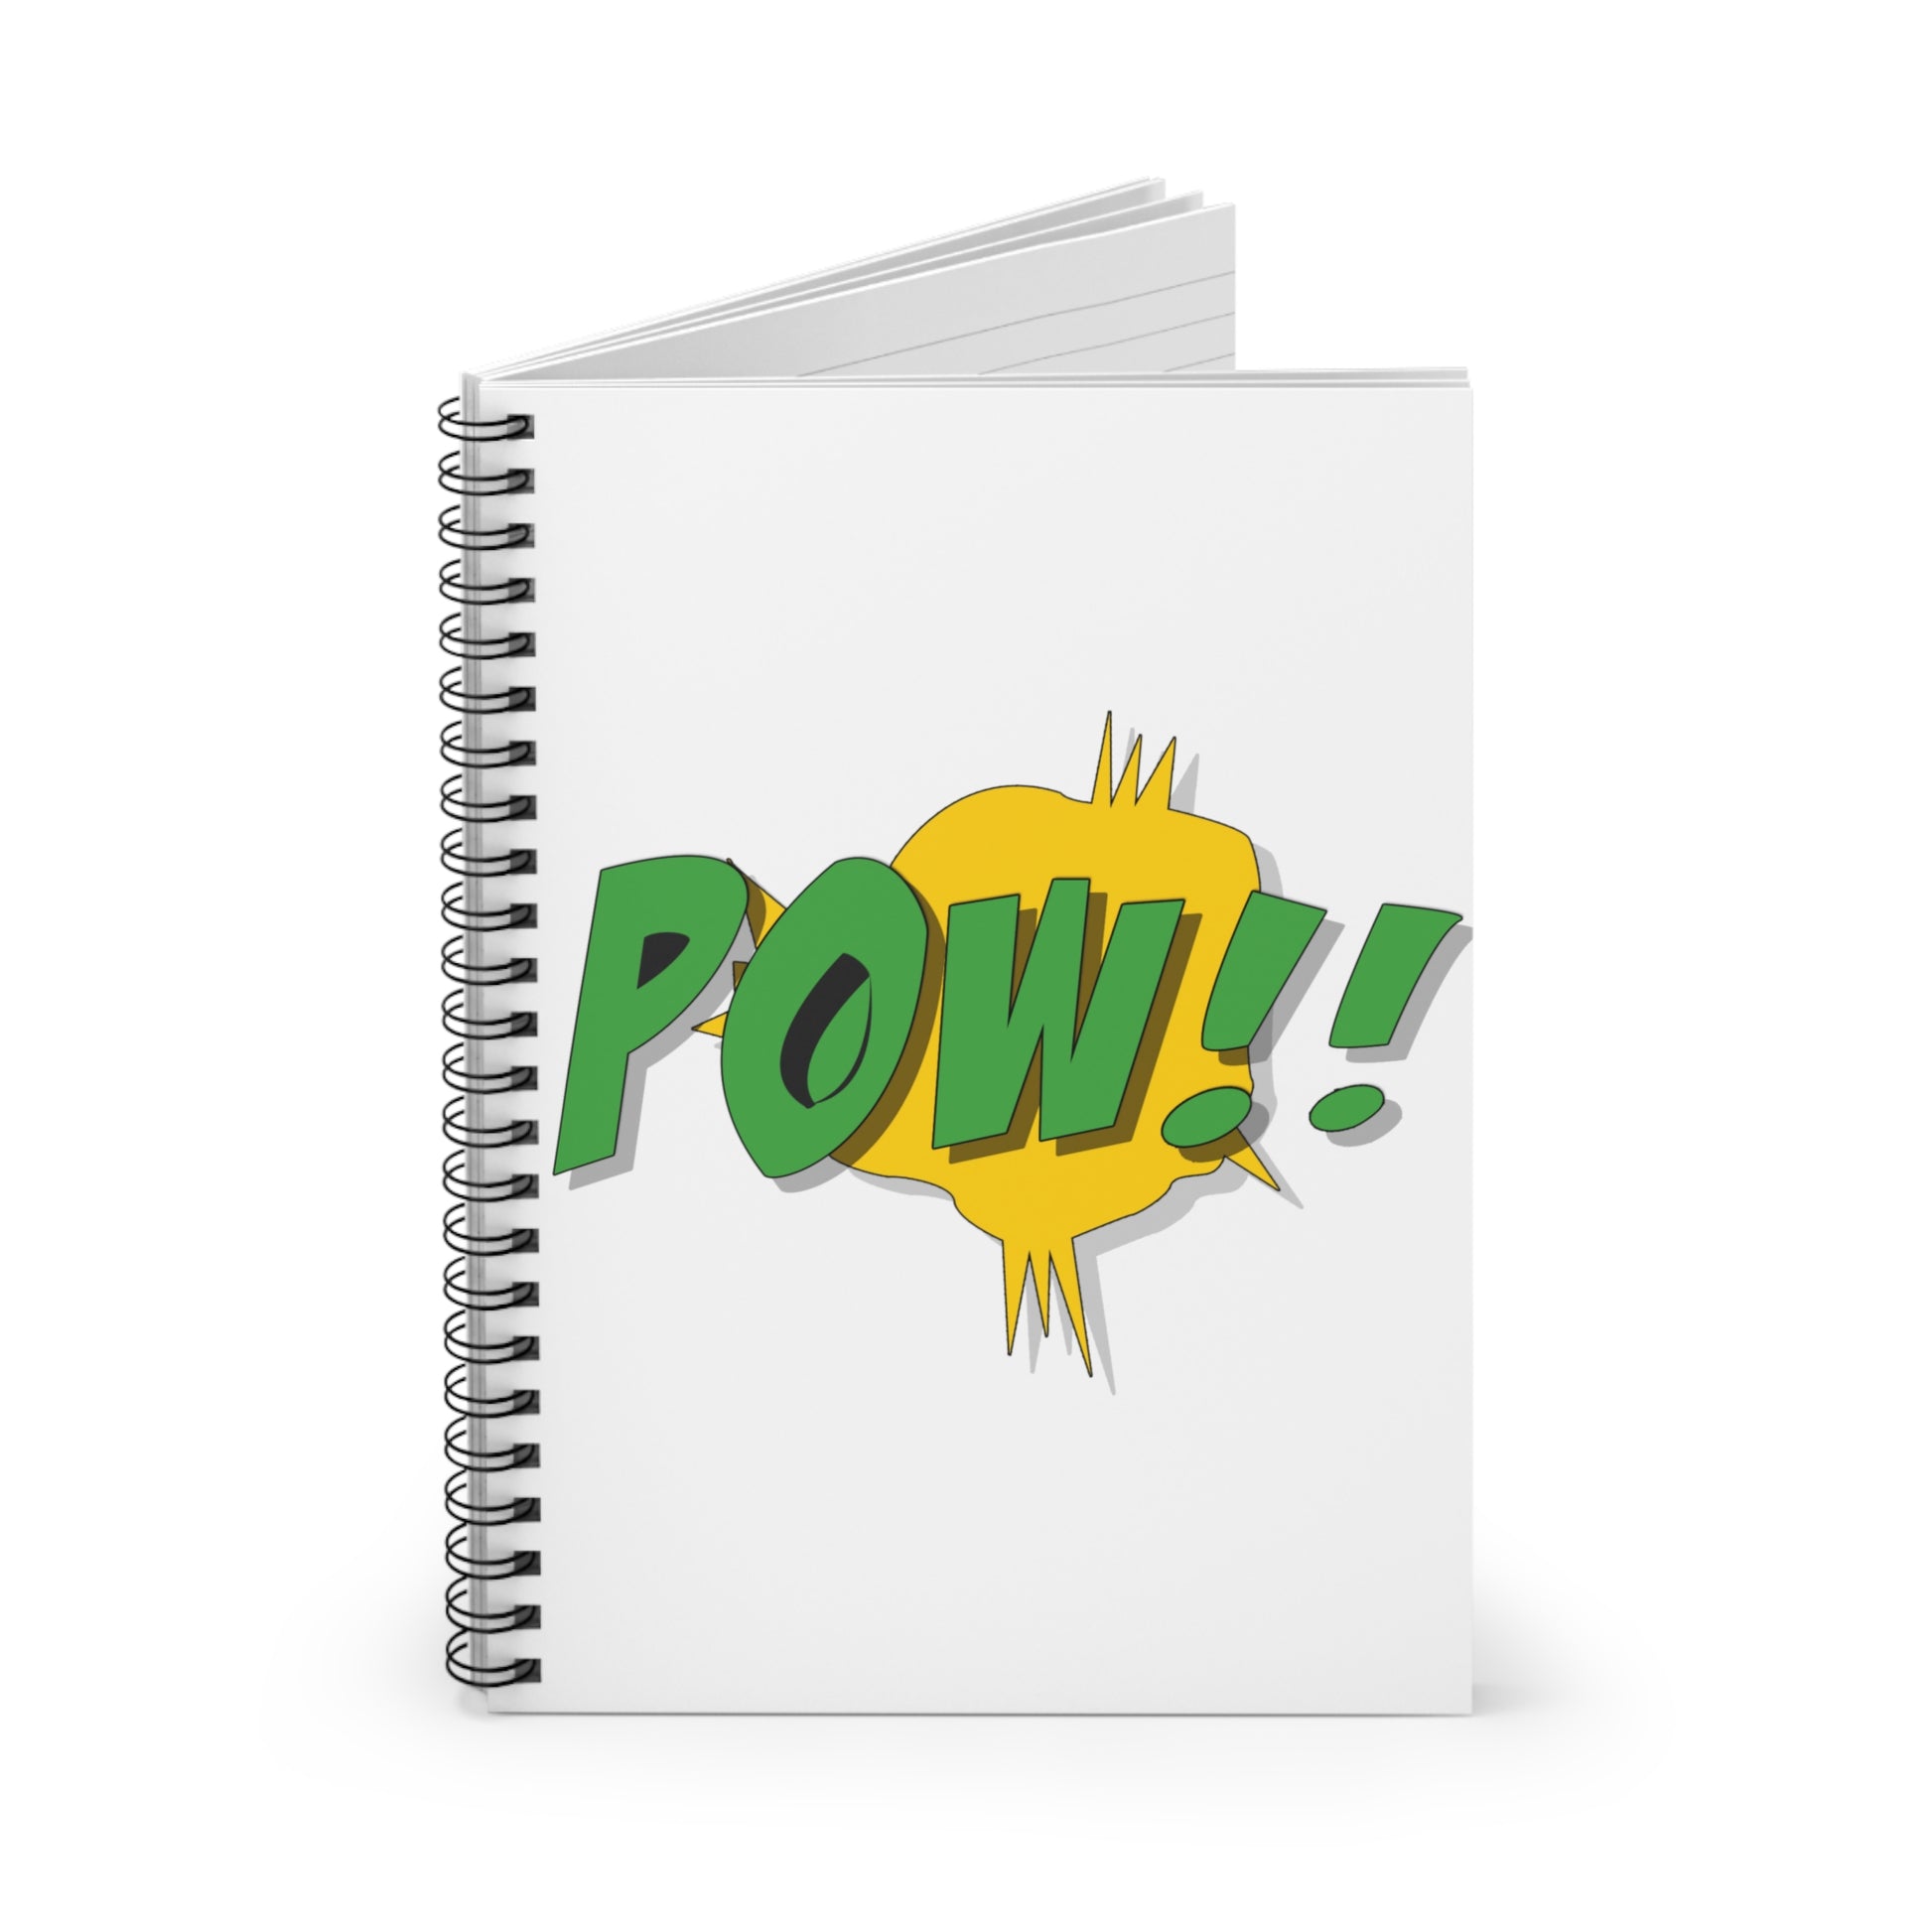 Superhero POW: Spiral Notebook - Log Books - Journals - Diaries - and More Custom Printed by TheGlassyLass.com